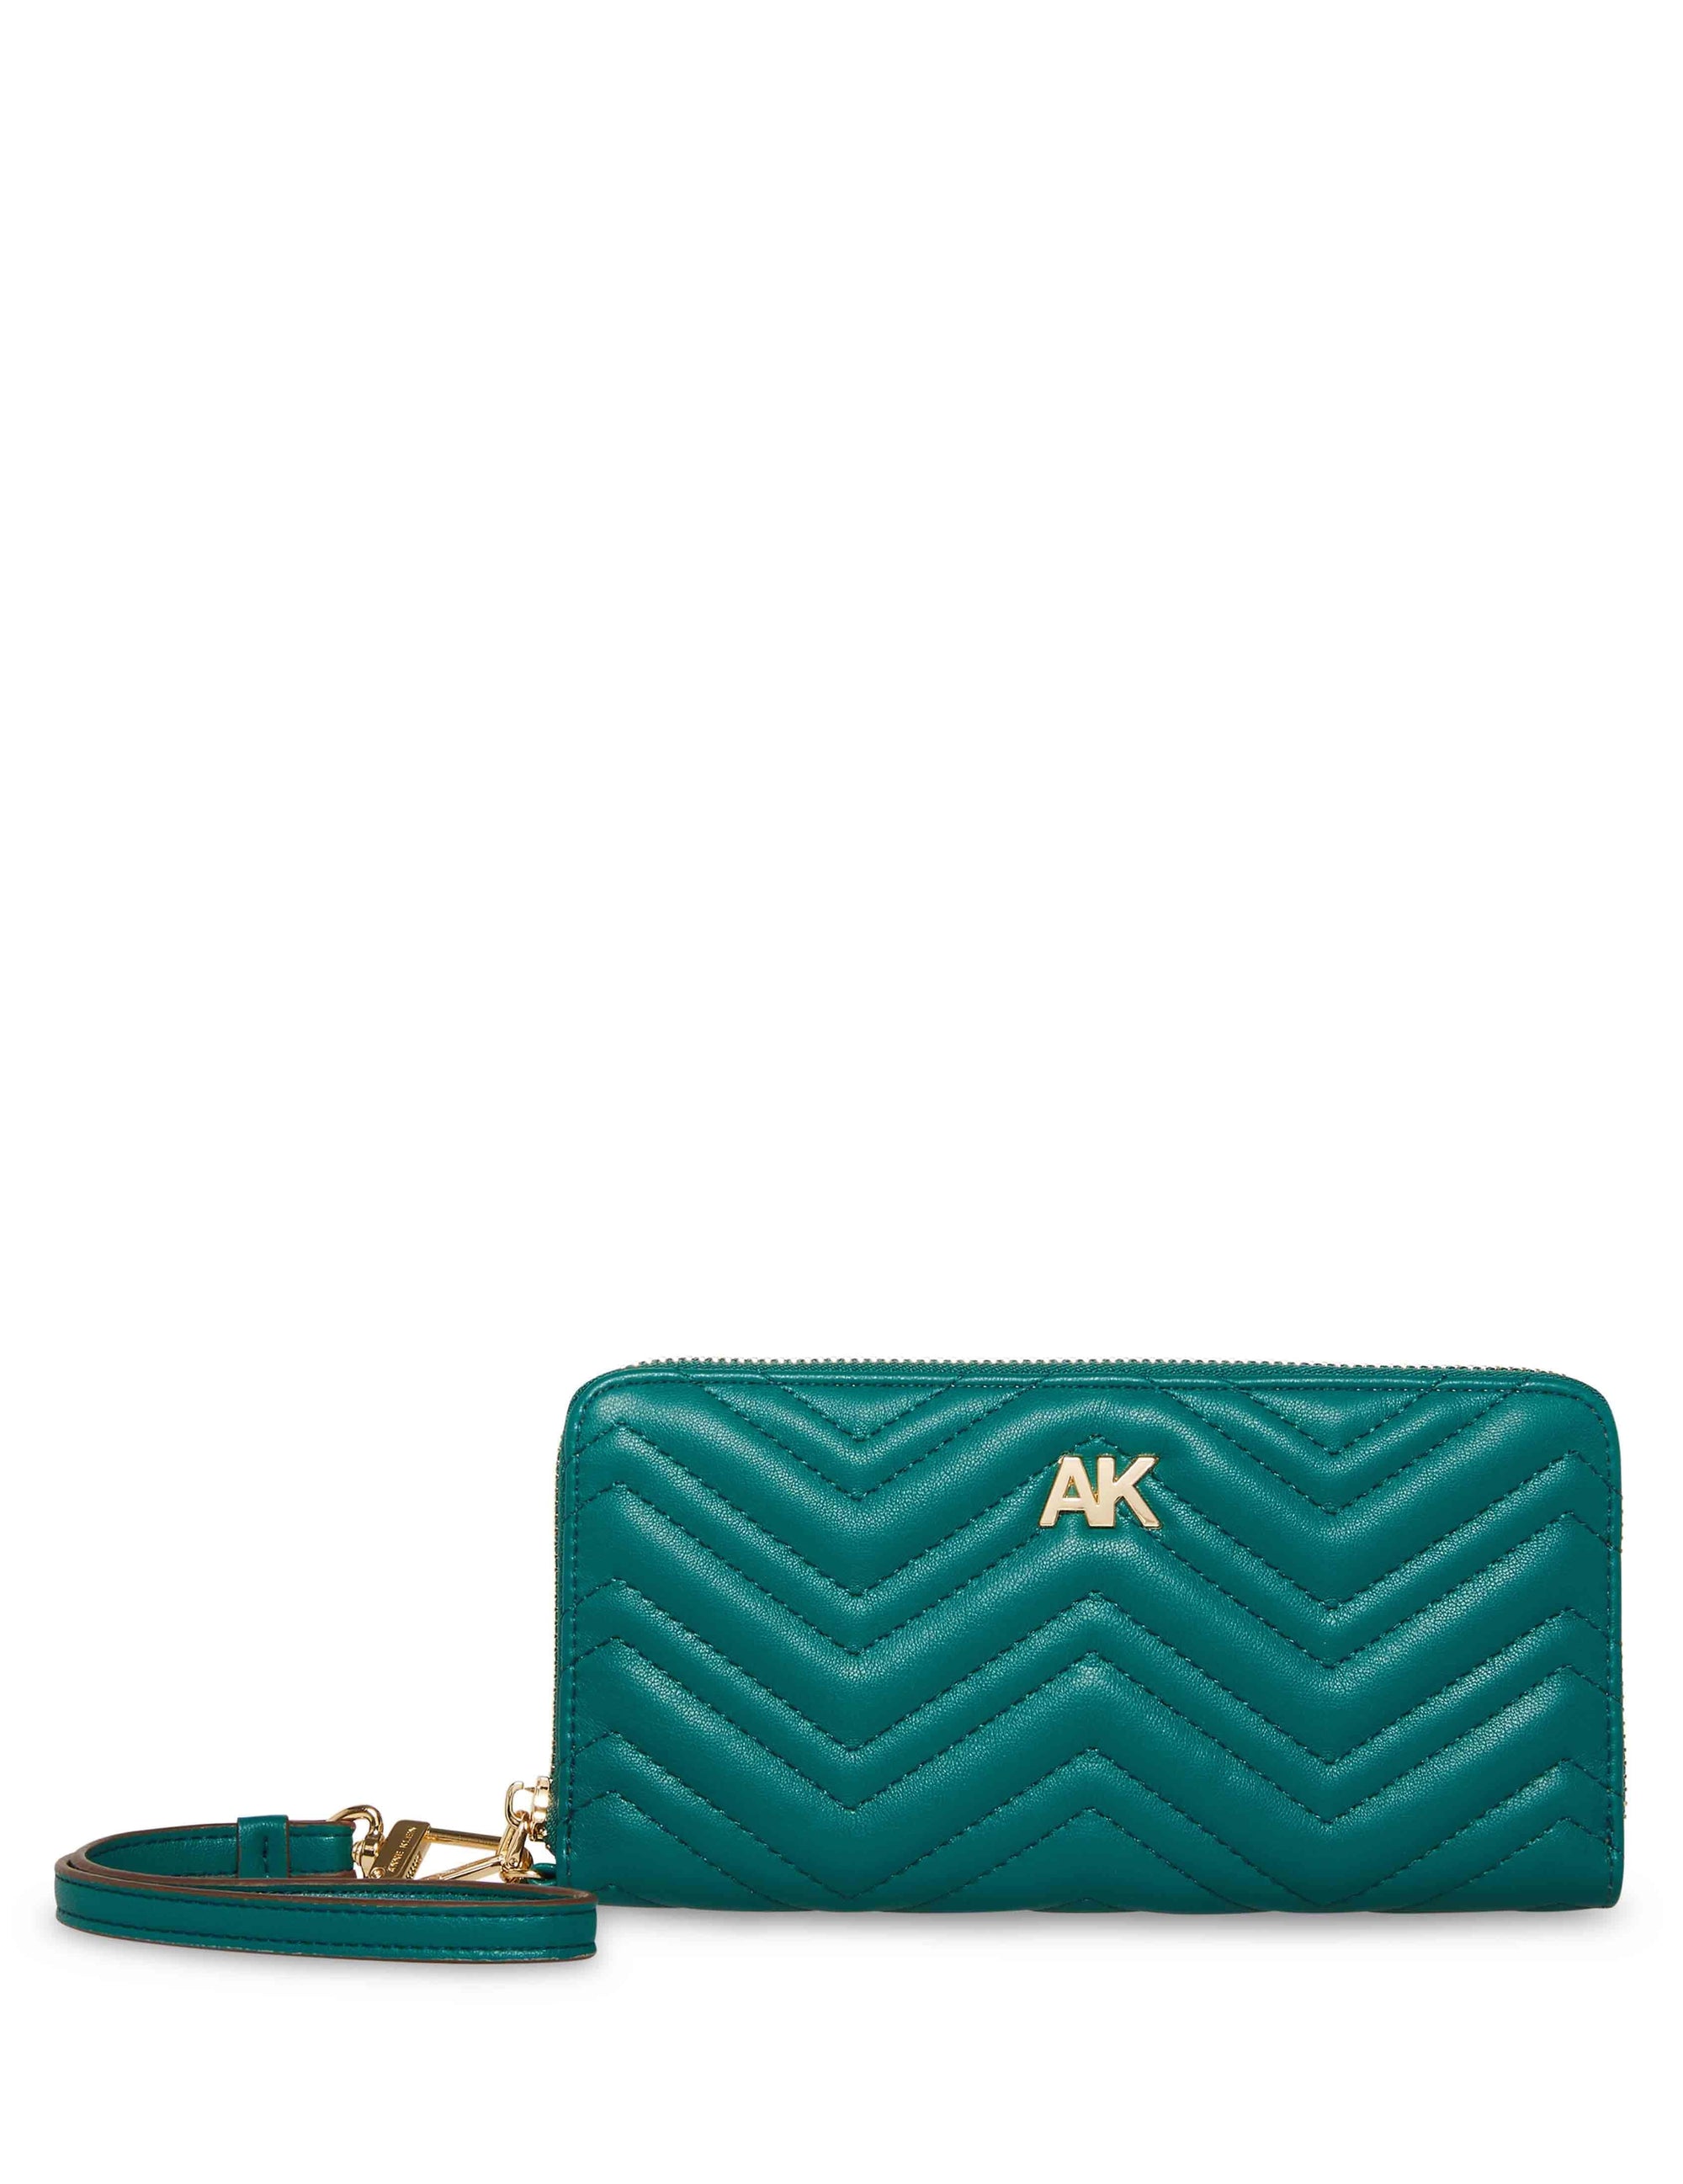 Anne Klein Boxed Slim Zip Wallet with Detachable Wristlet - Pink